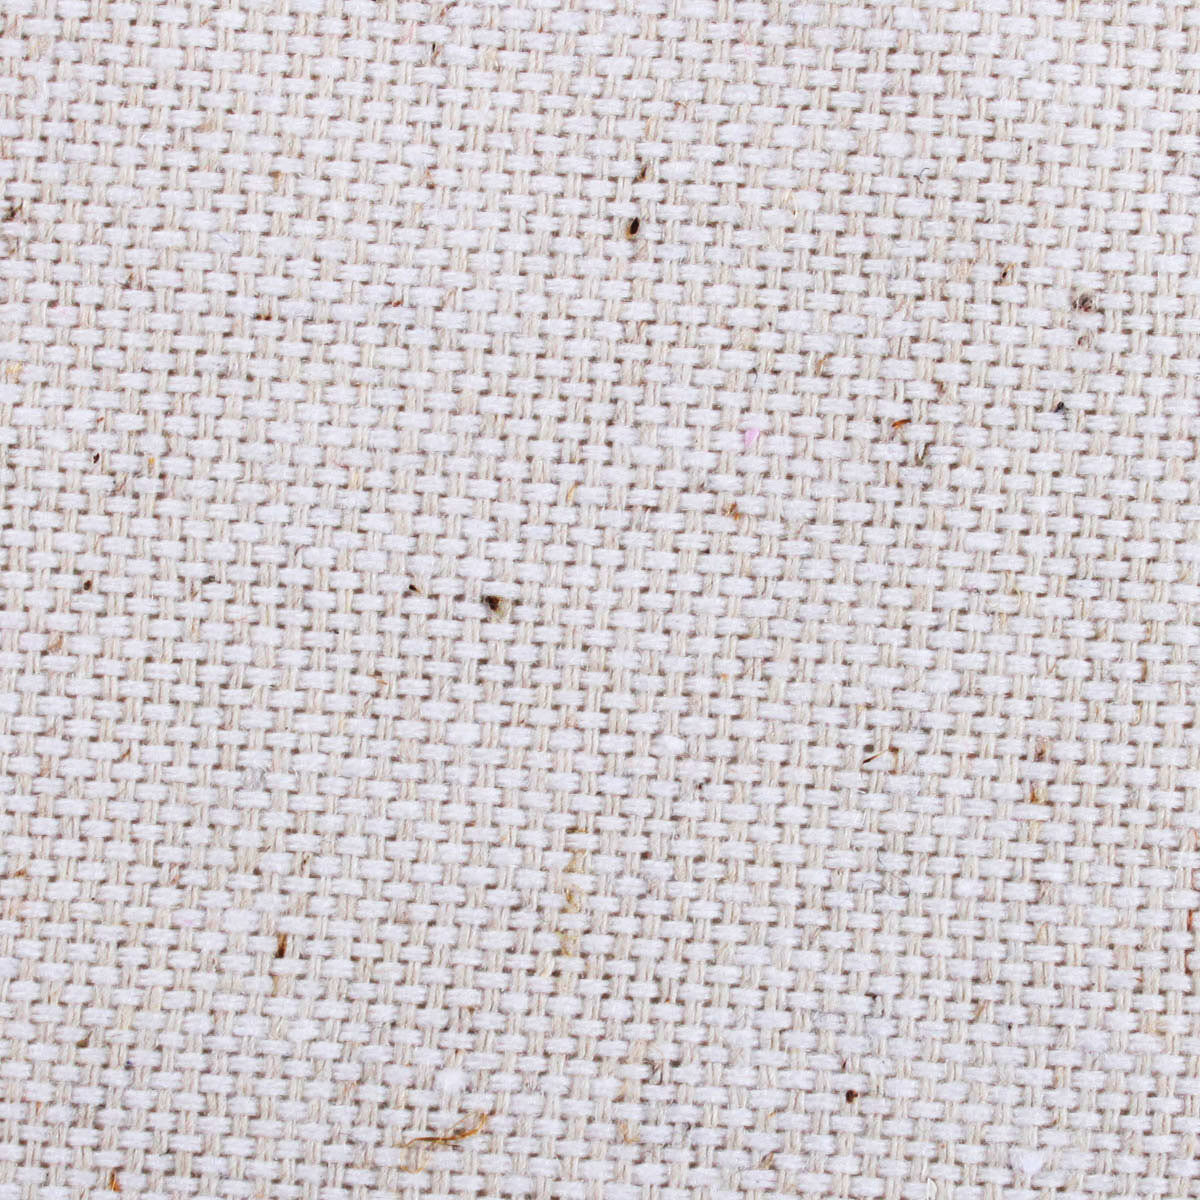 Dry Khaki White Linen Fabric Pocket Square